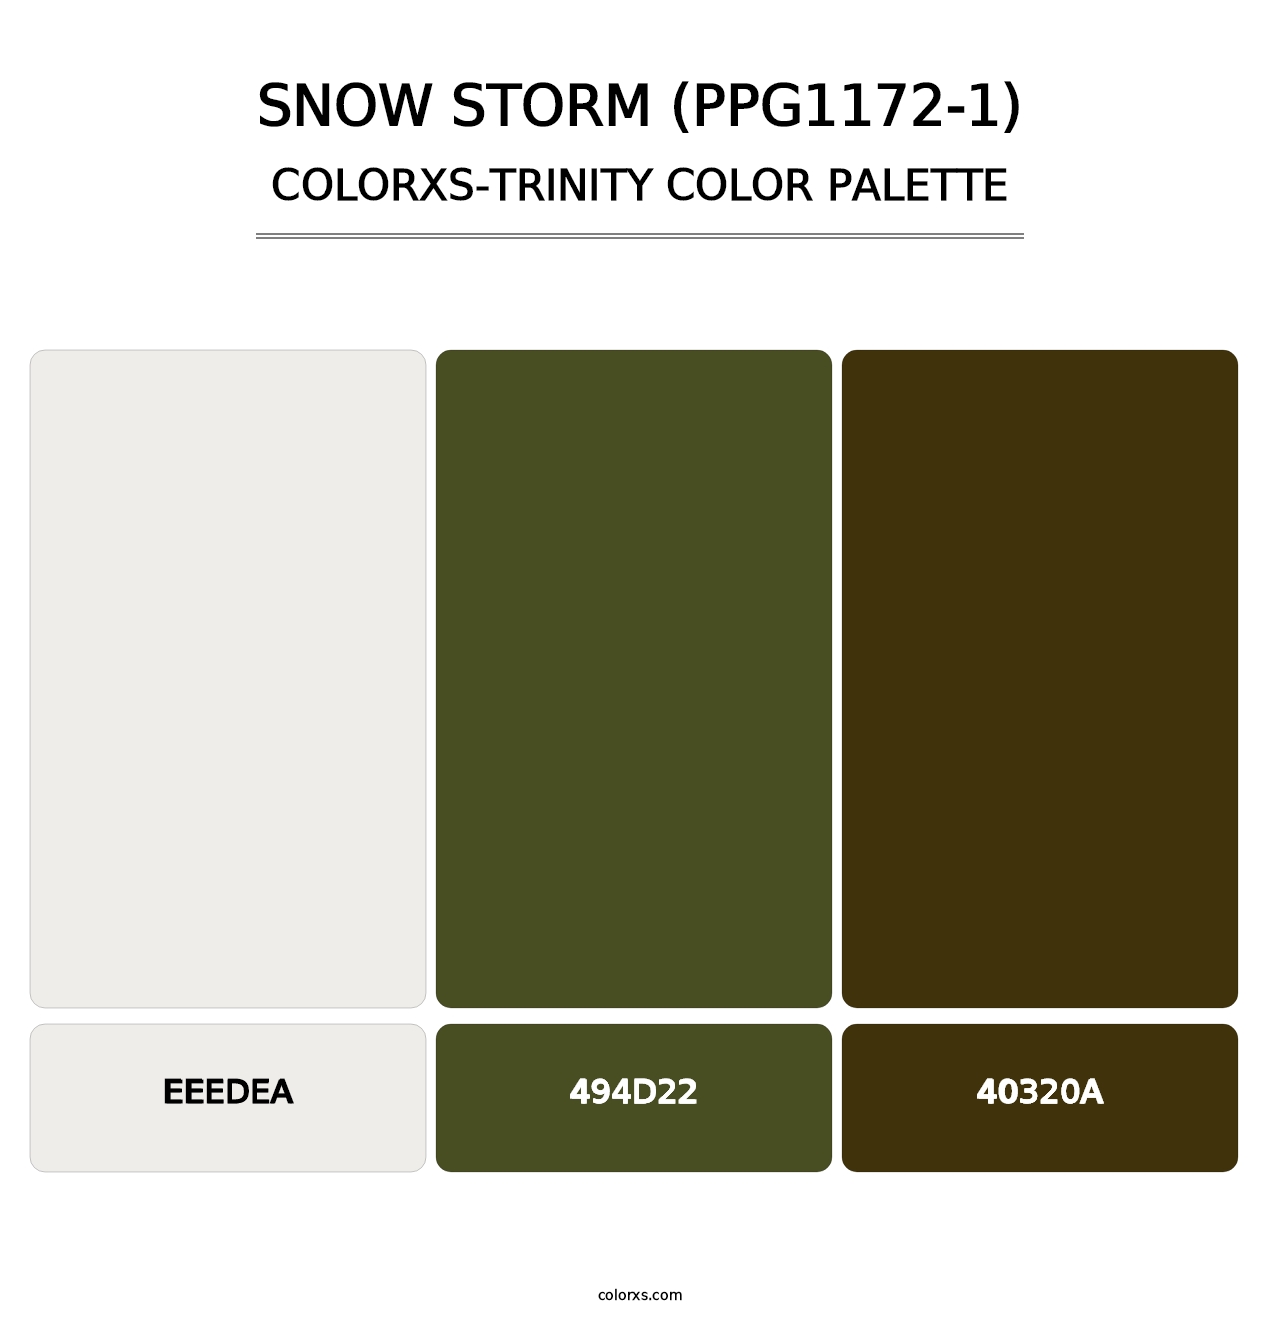 Snow Storm (PPG1172-1) - Colorxs Trinity Palette